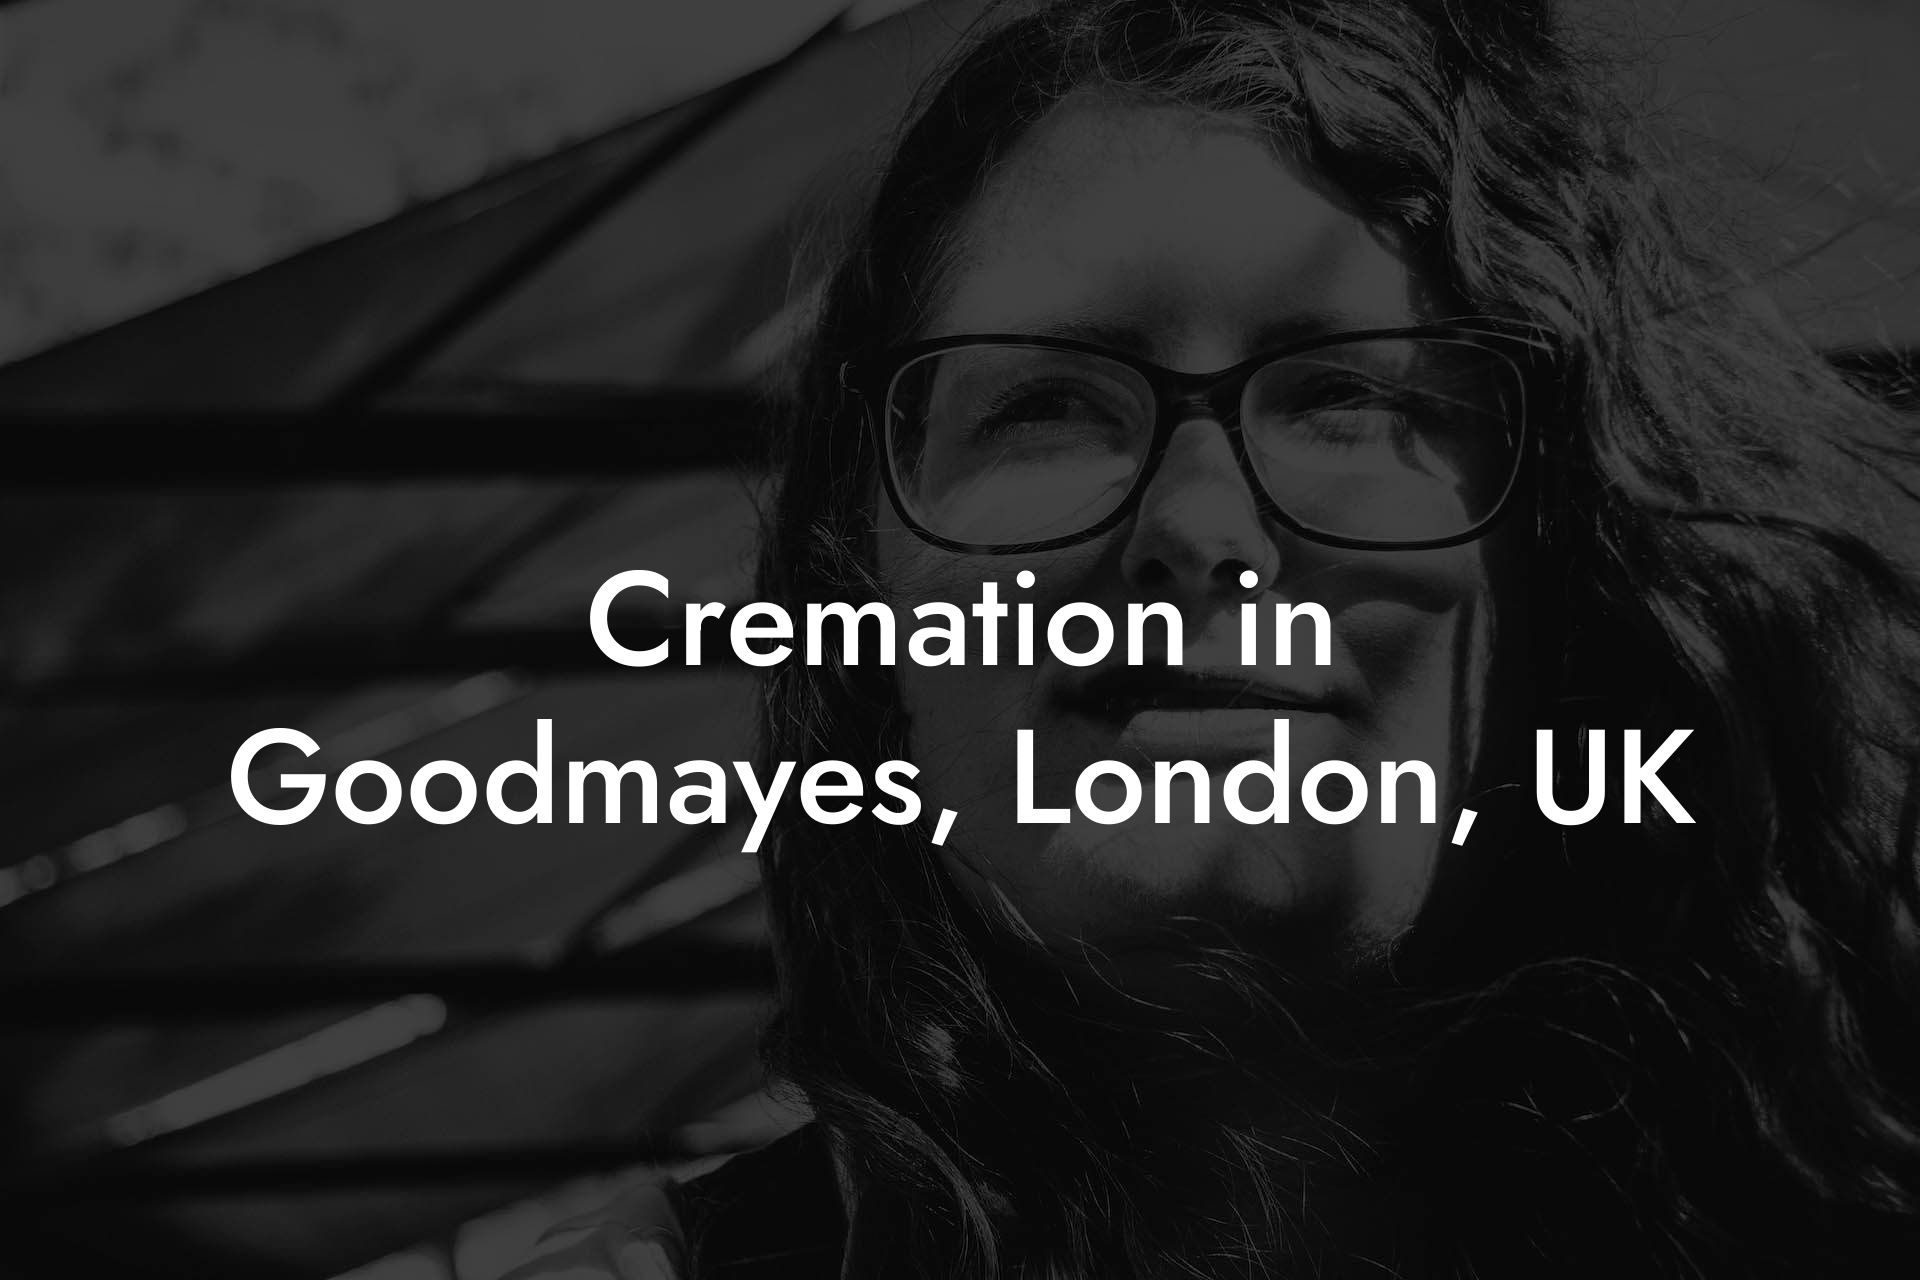 Cremation in Goodmayes, London, UK